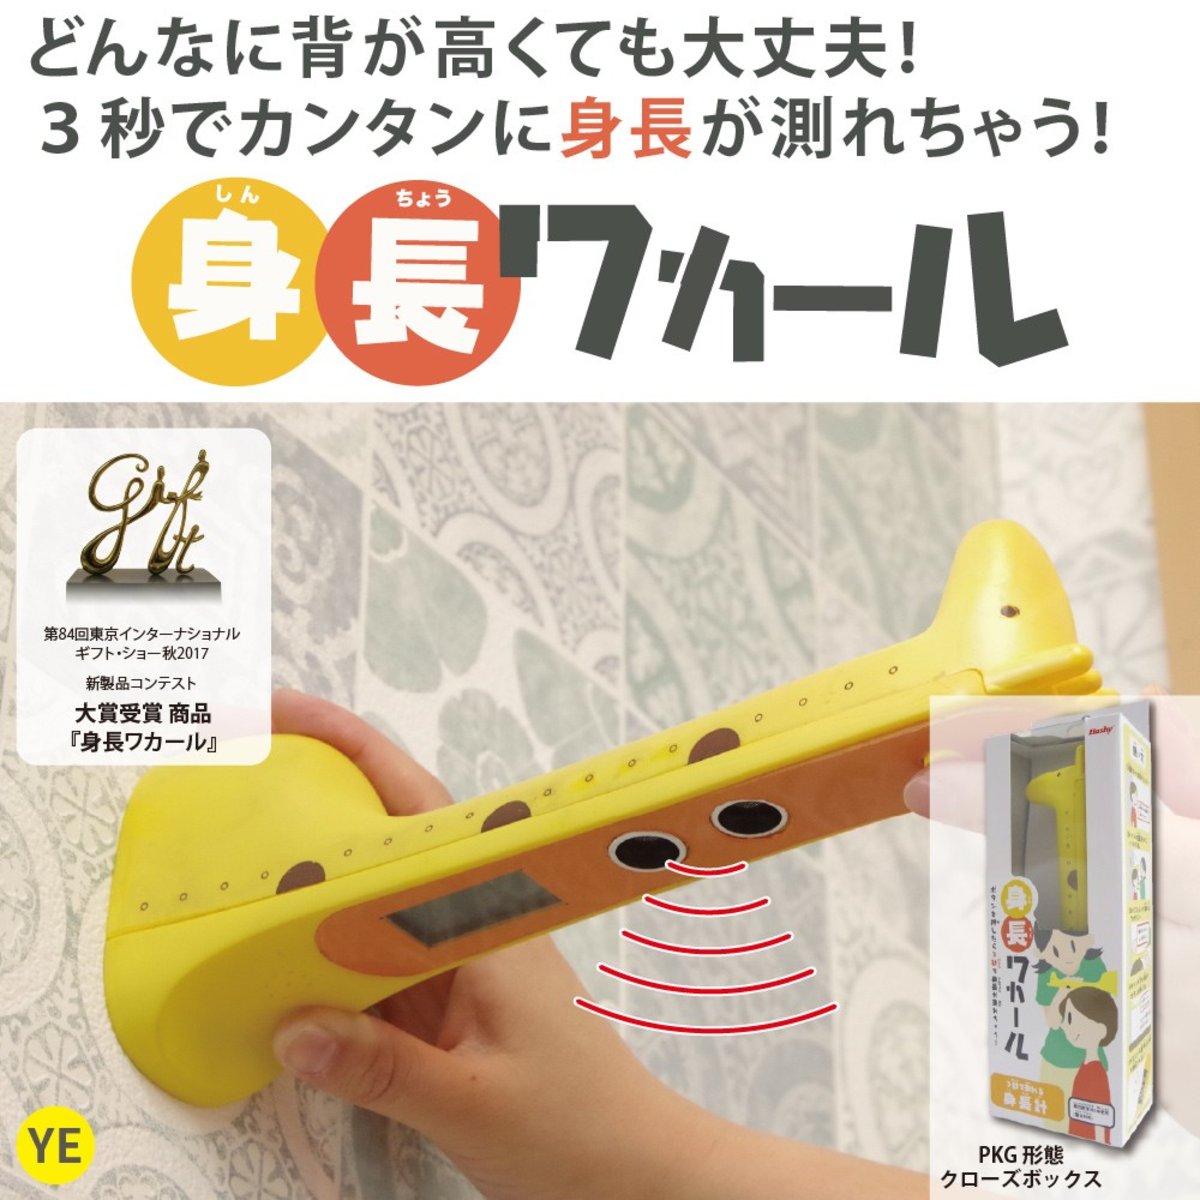 【Yellow Giraffe】Electric Height Meter (Parallel Goods)